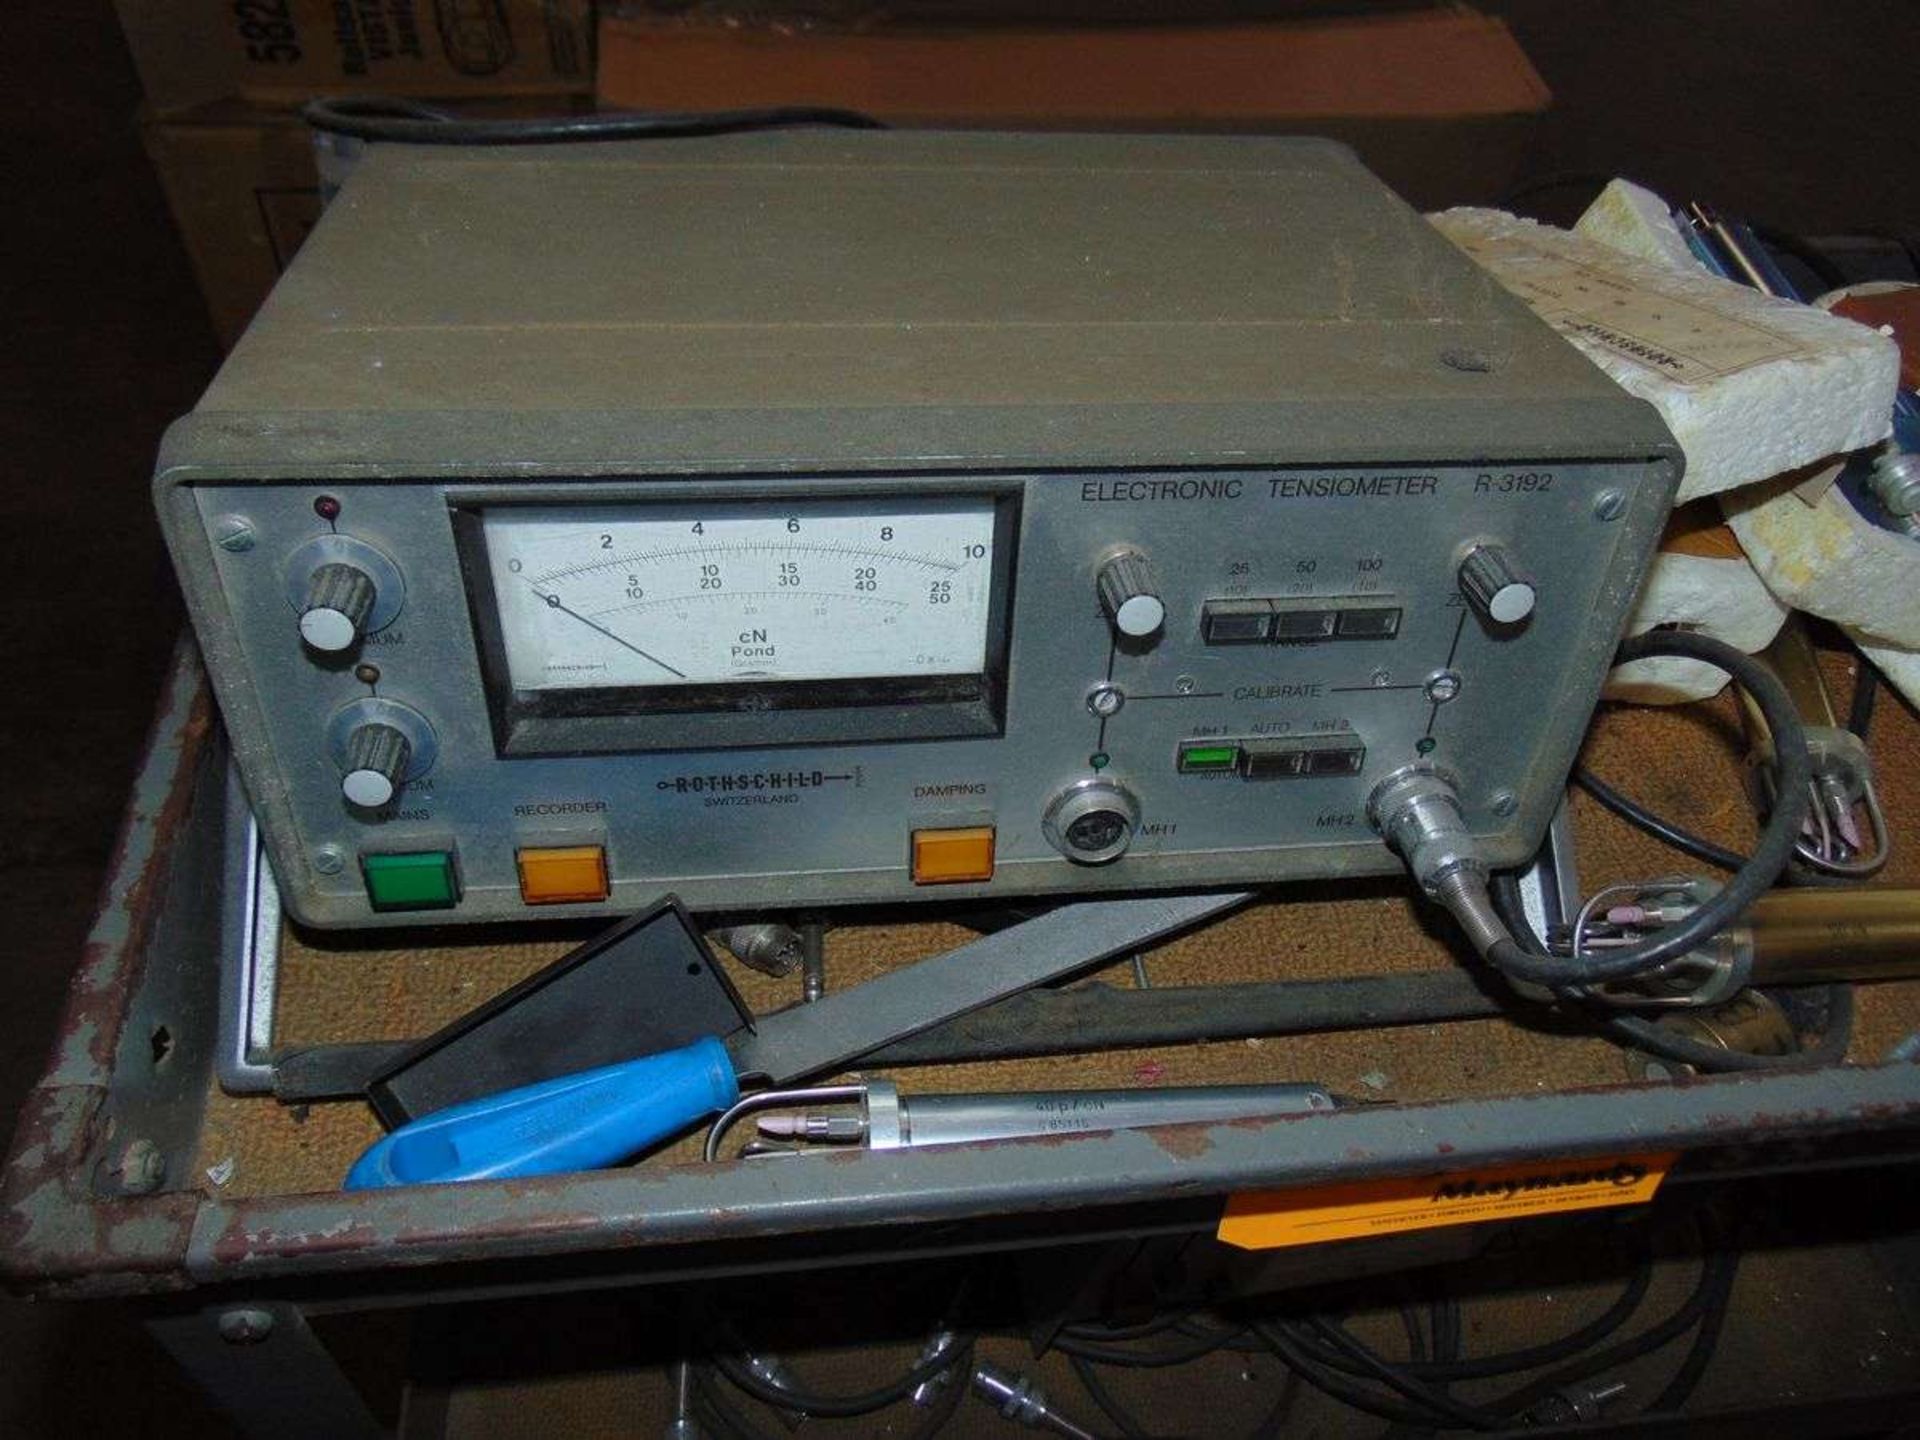 Rothschild Tensiometer Test Equipment - Image 4 of 4